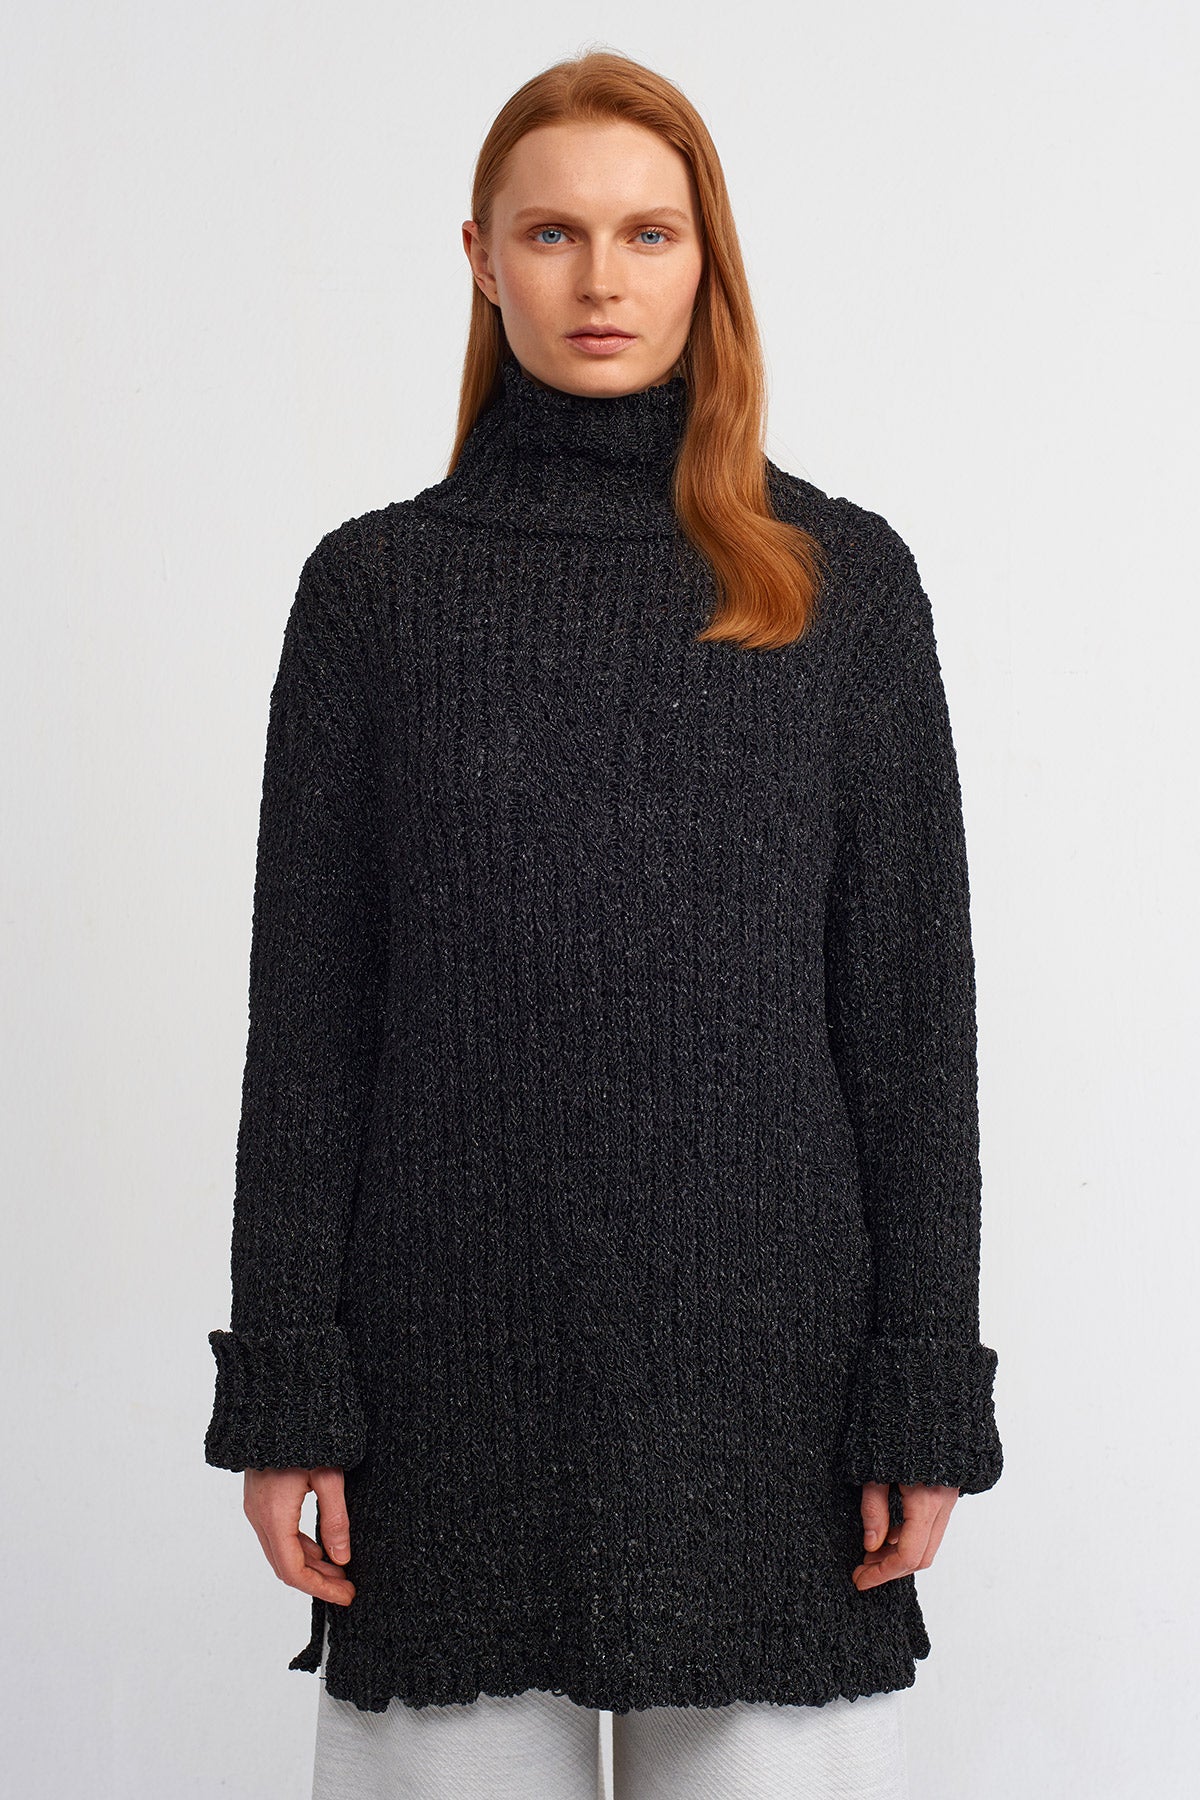 Black Turtleneck Knit Sweater-Y241011079